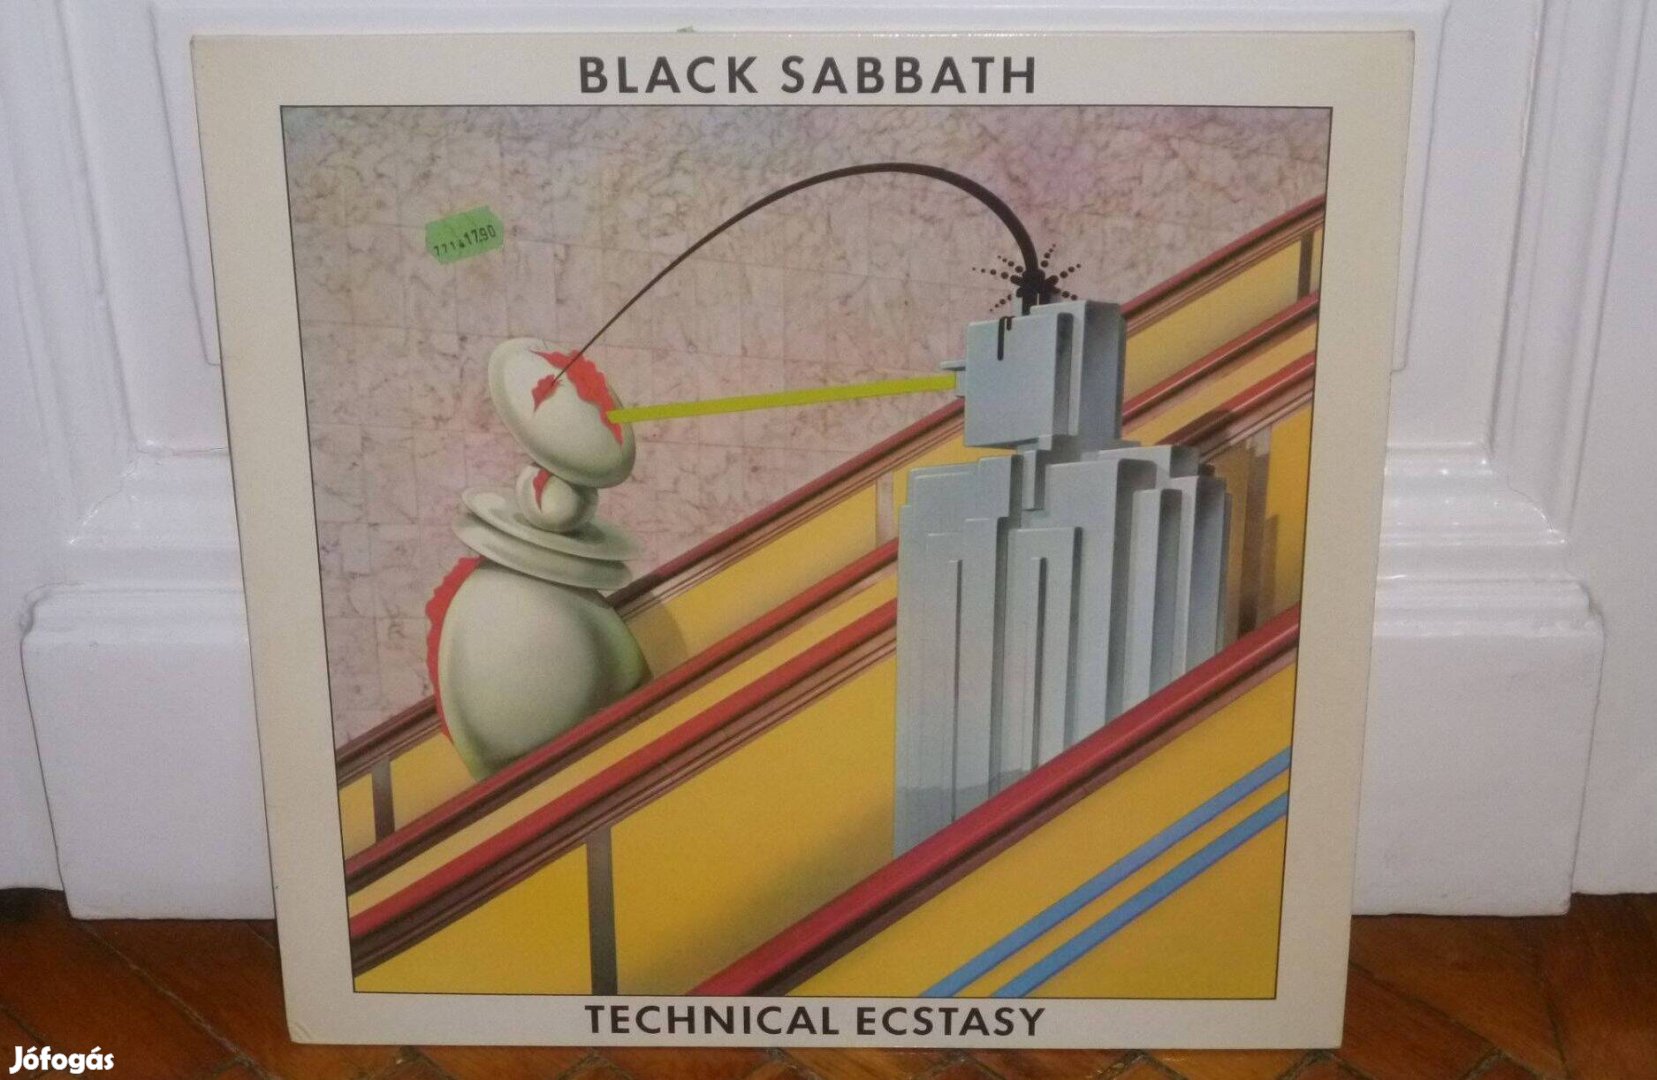 Black Sabbath - Technical Ecstasy LP 1976 Germany